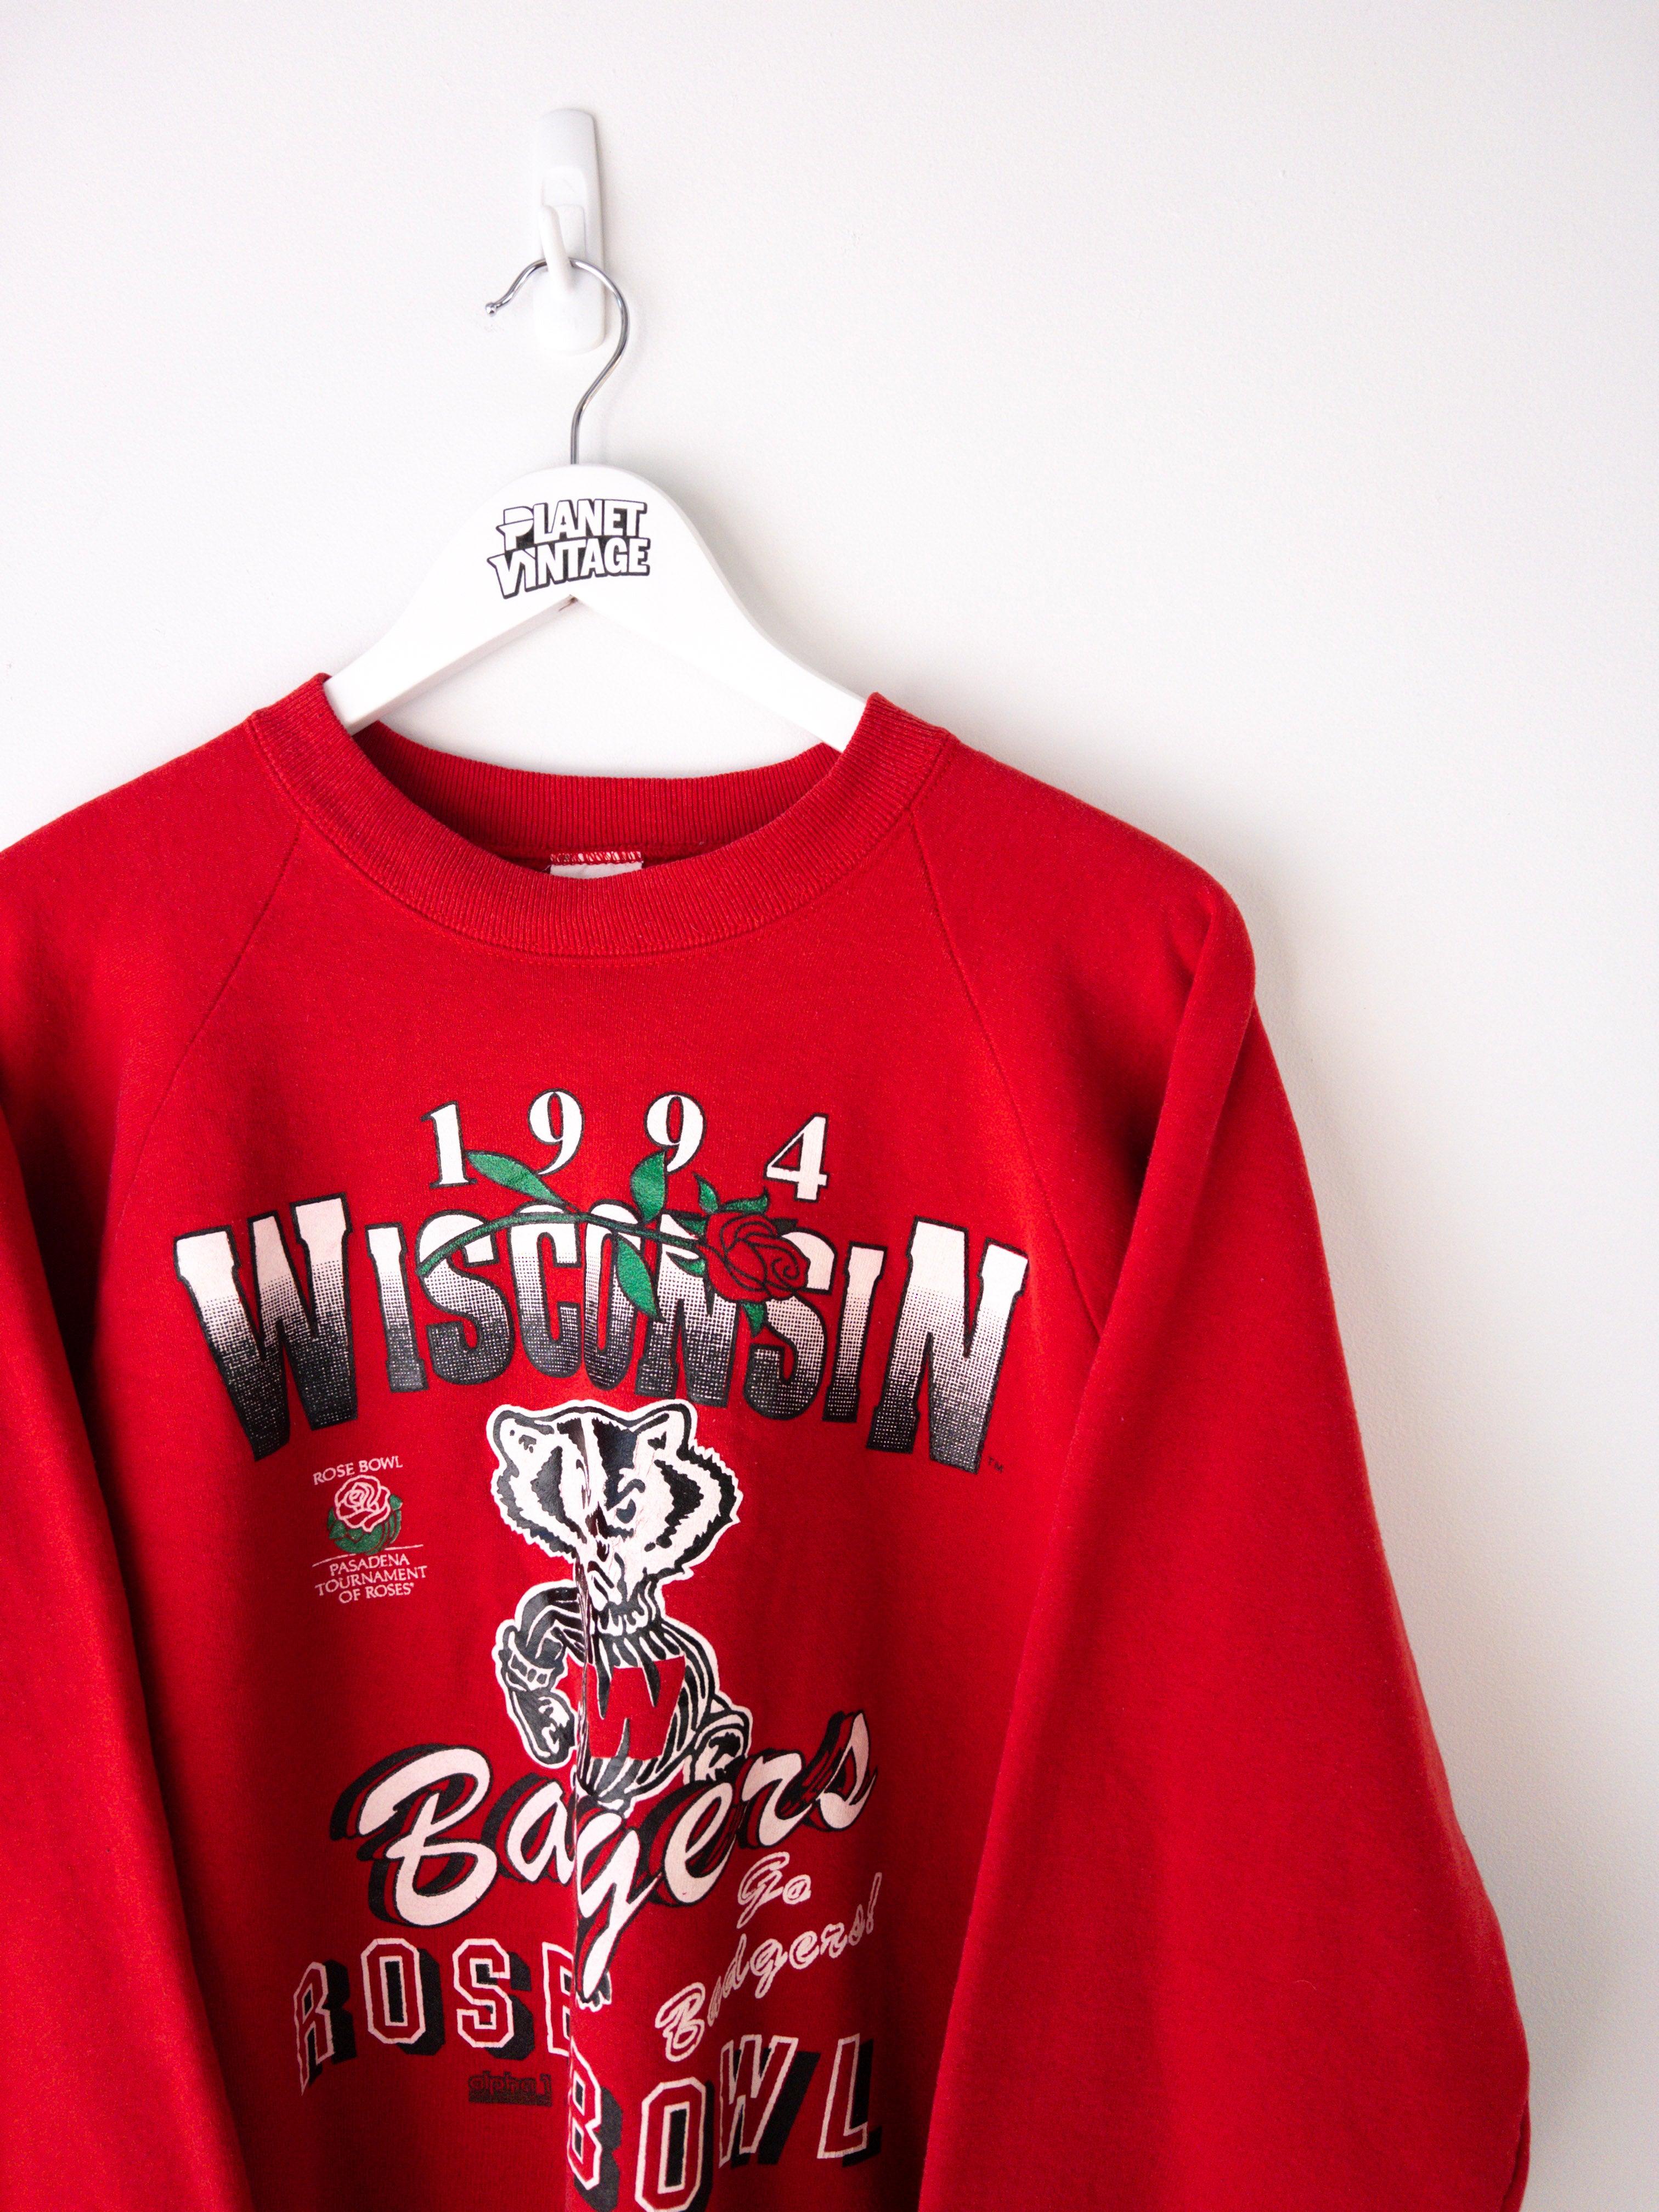 Wisconsin Badgers 1994 Sweatshirt (L) - Planet Vintage Store